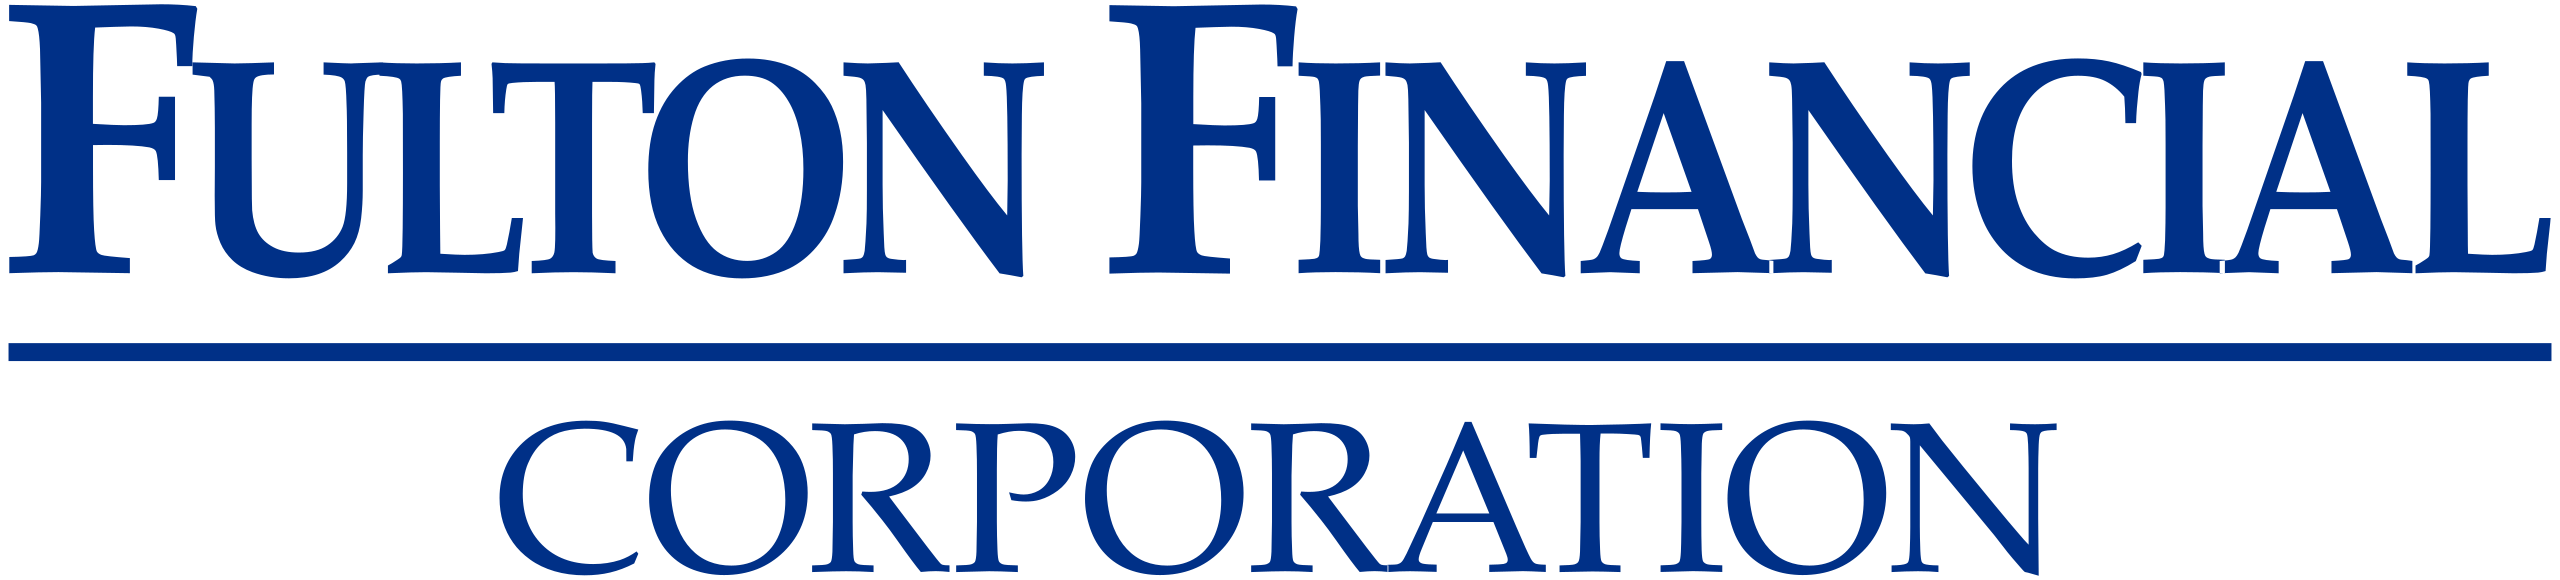 Fulton Financial Corp.